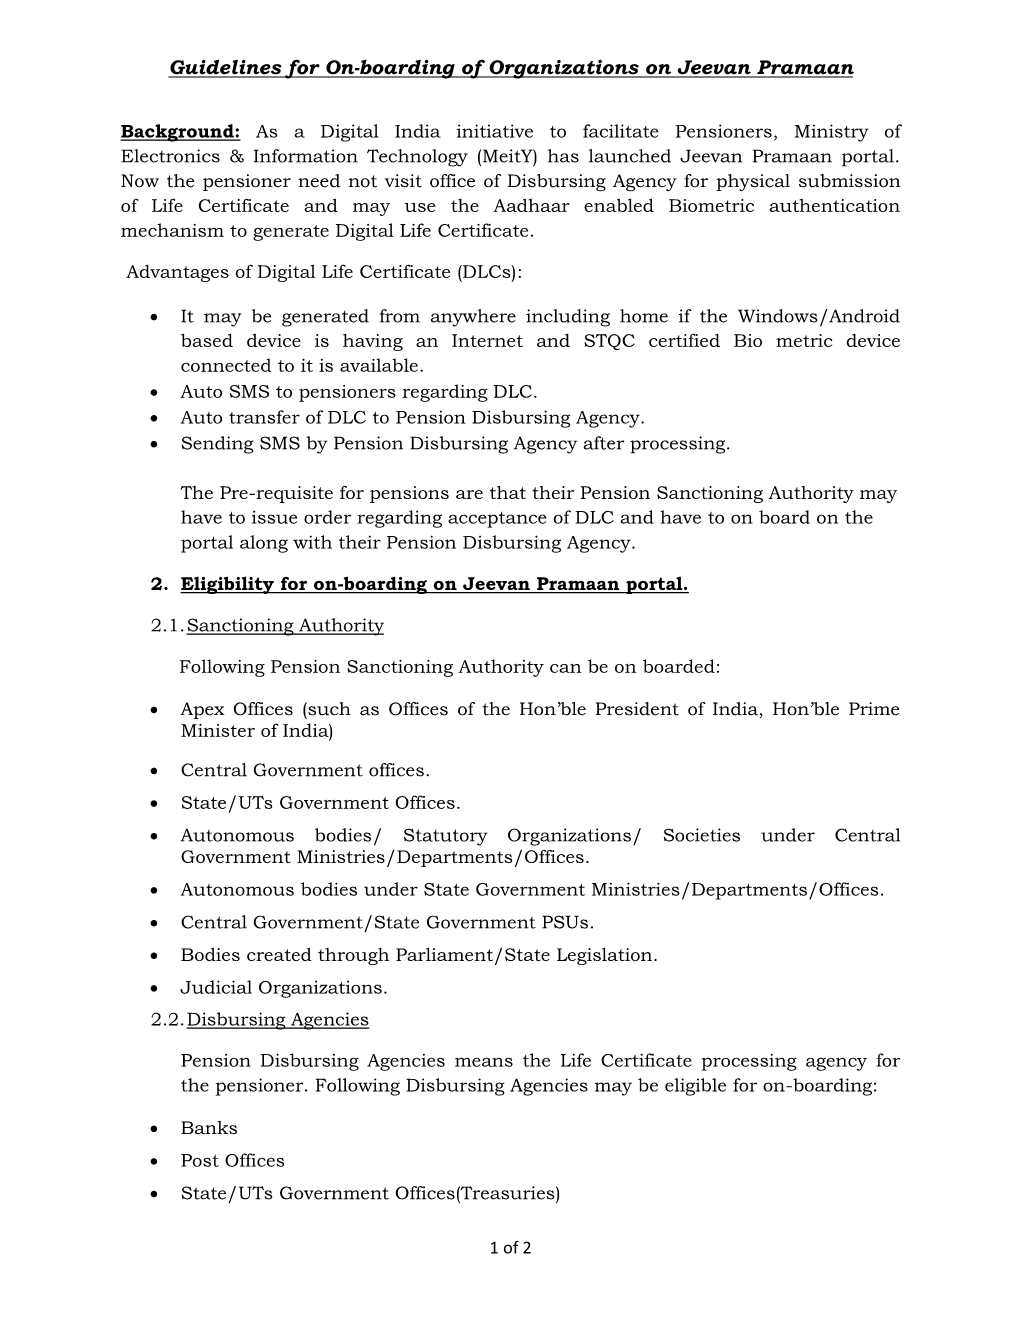 Guidelines for On-Boarding of Organizations on Jeevan Pramaan